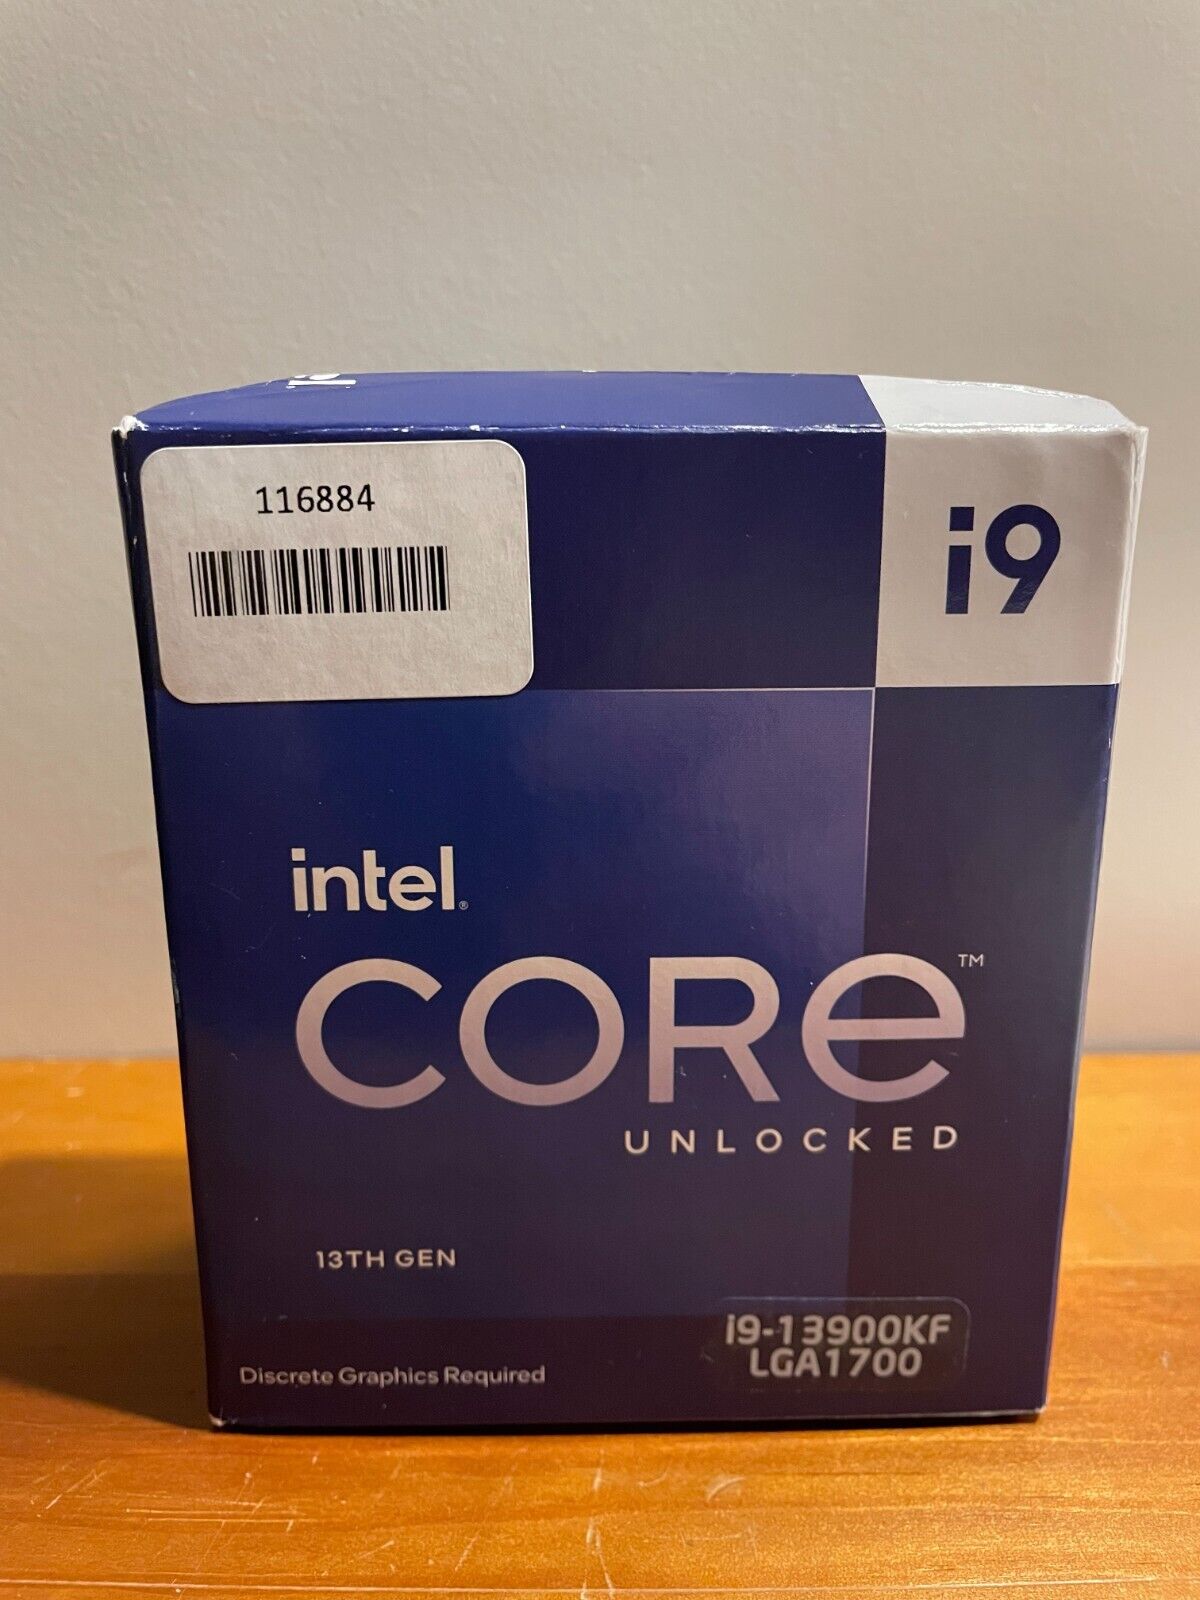 Intel Core i9-13900KF Unlocked Desktop Processor - 24 Core, LGA 1700, Brand New